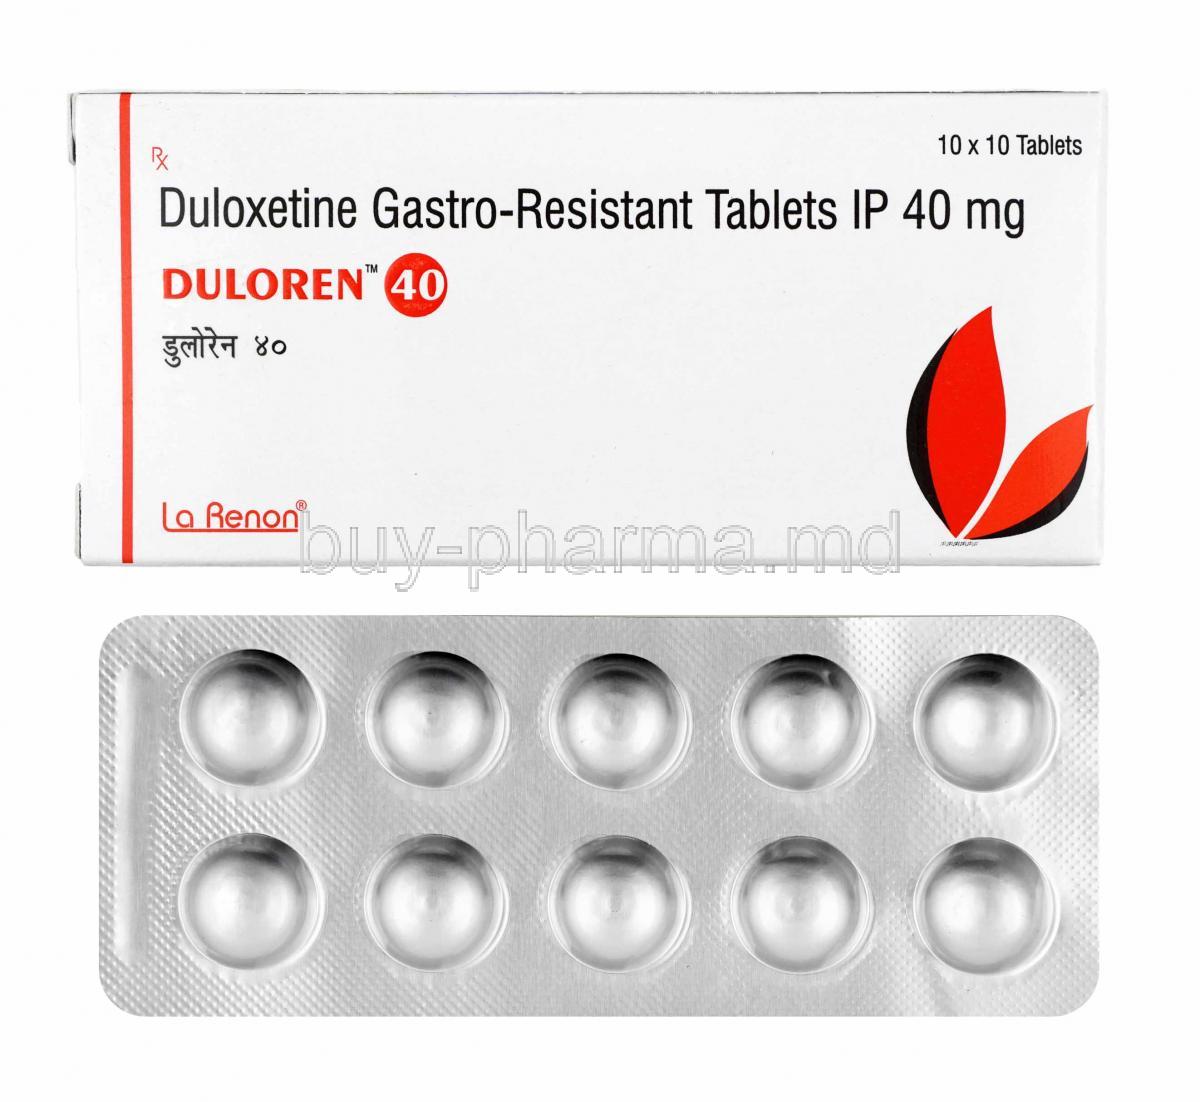 Duloren, Duloxetine 40mg, box and tablets